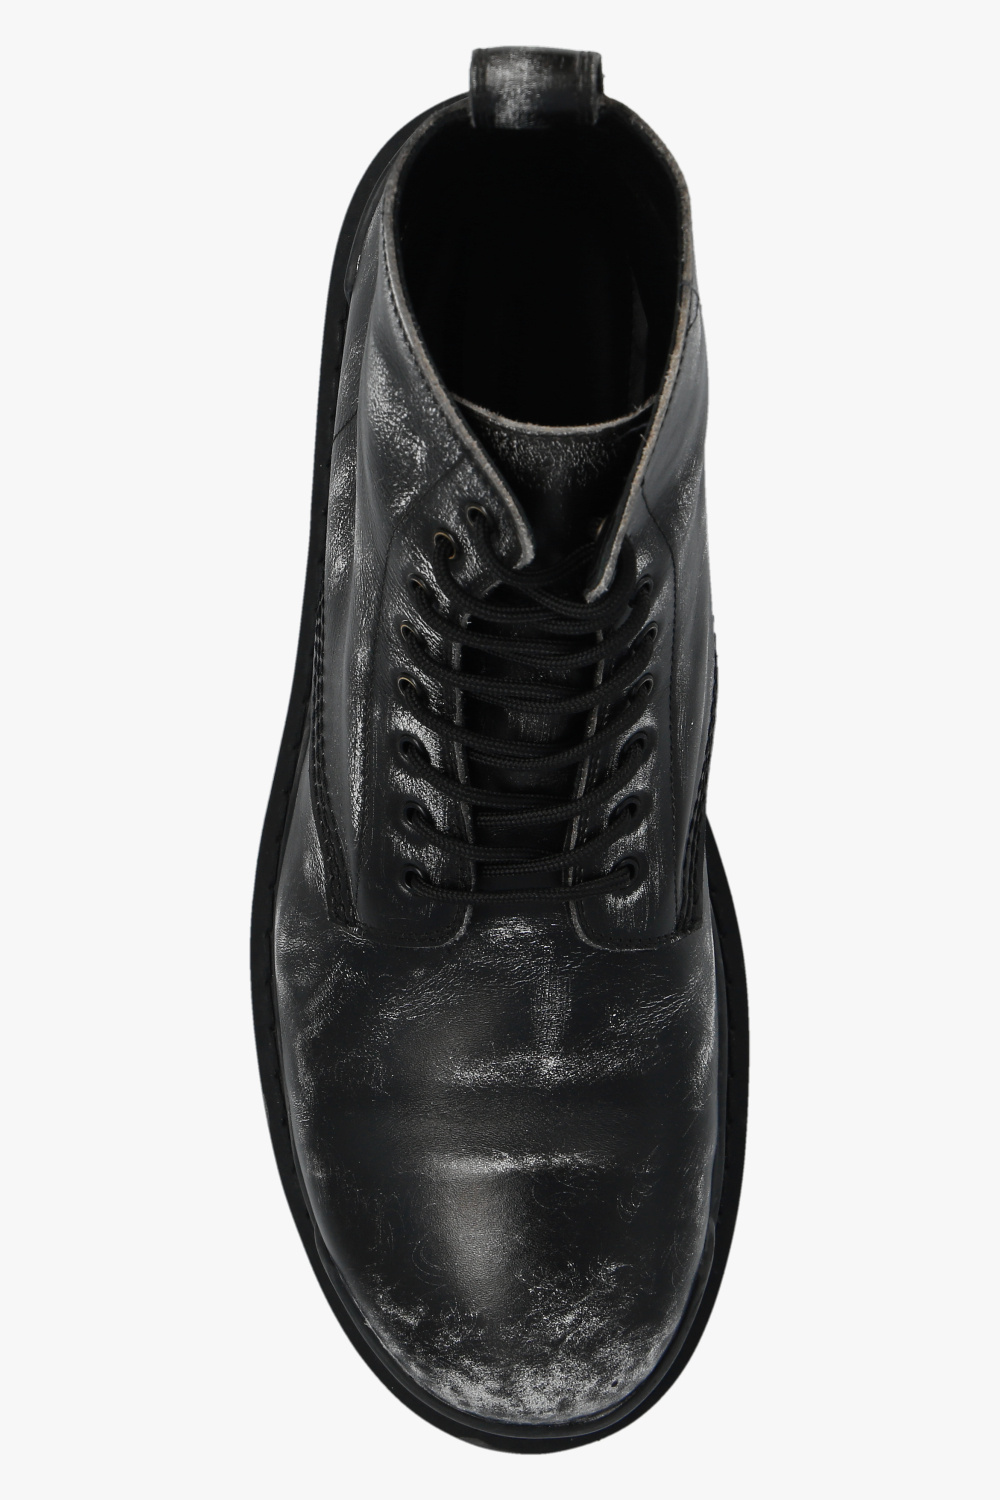 Balenciaga ‘Strike’ leather boots